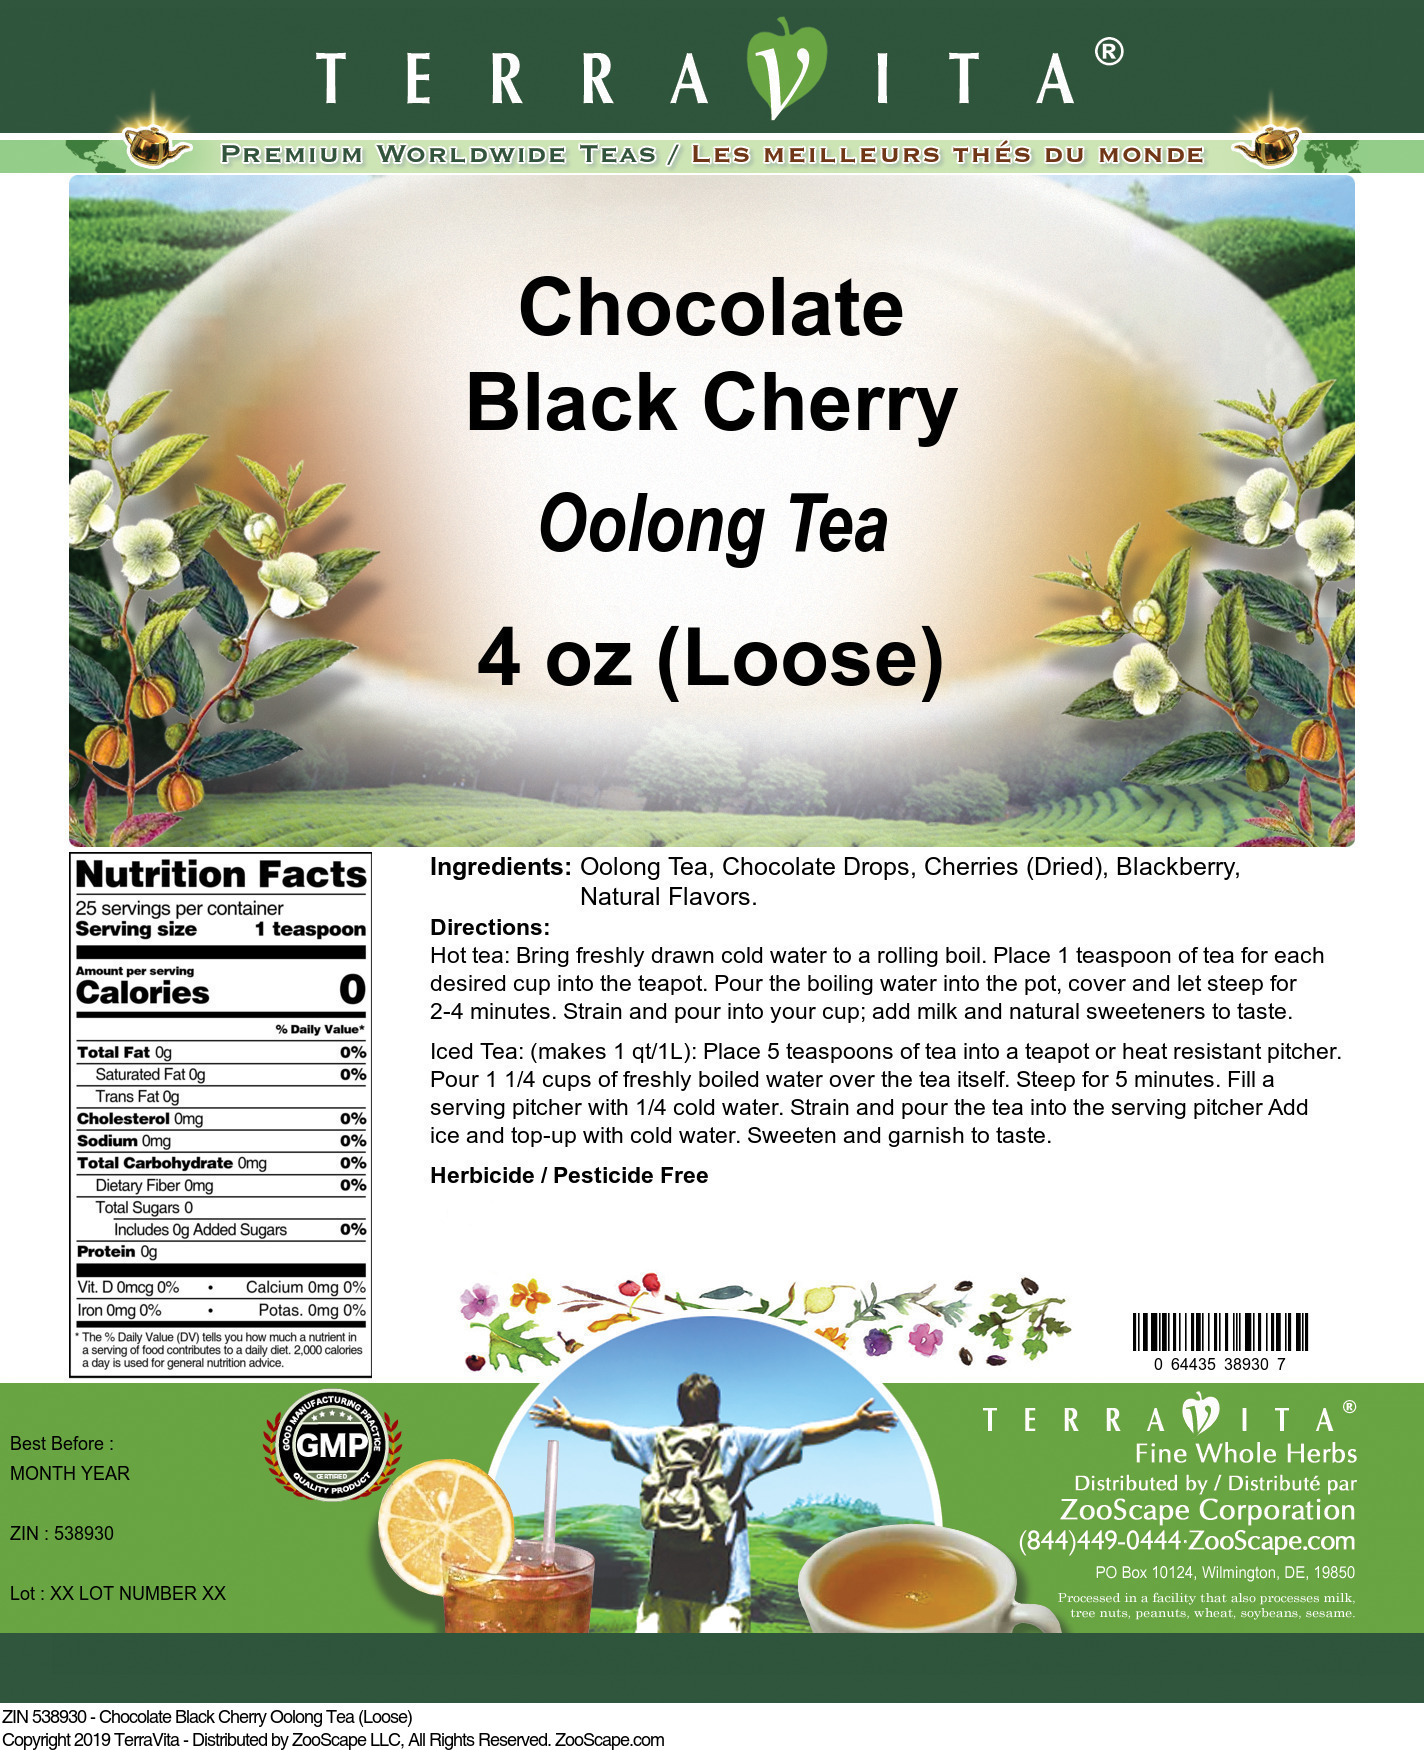 Chocolate Black Cherry Oolong Tea (Loose) - Label